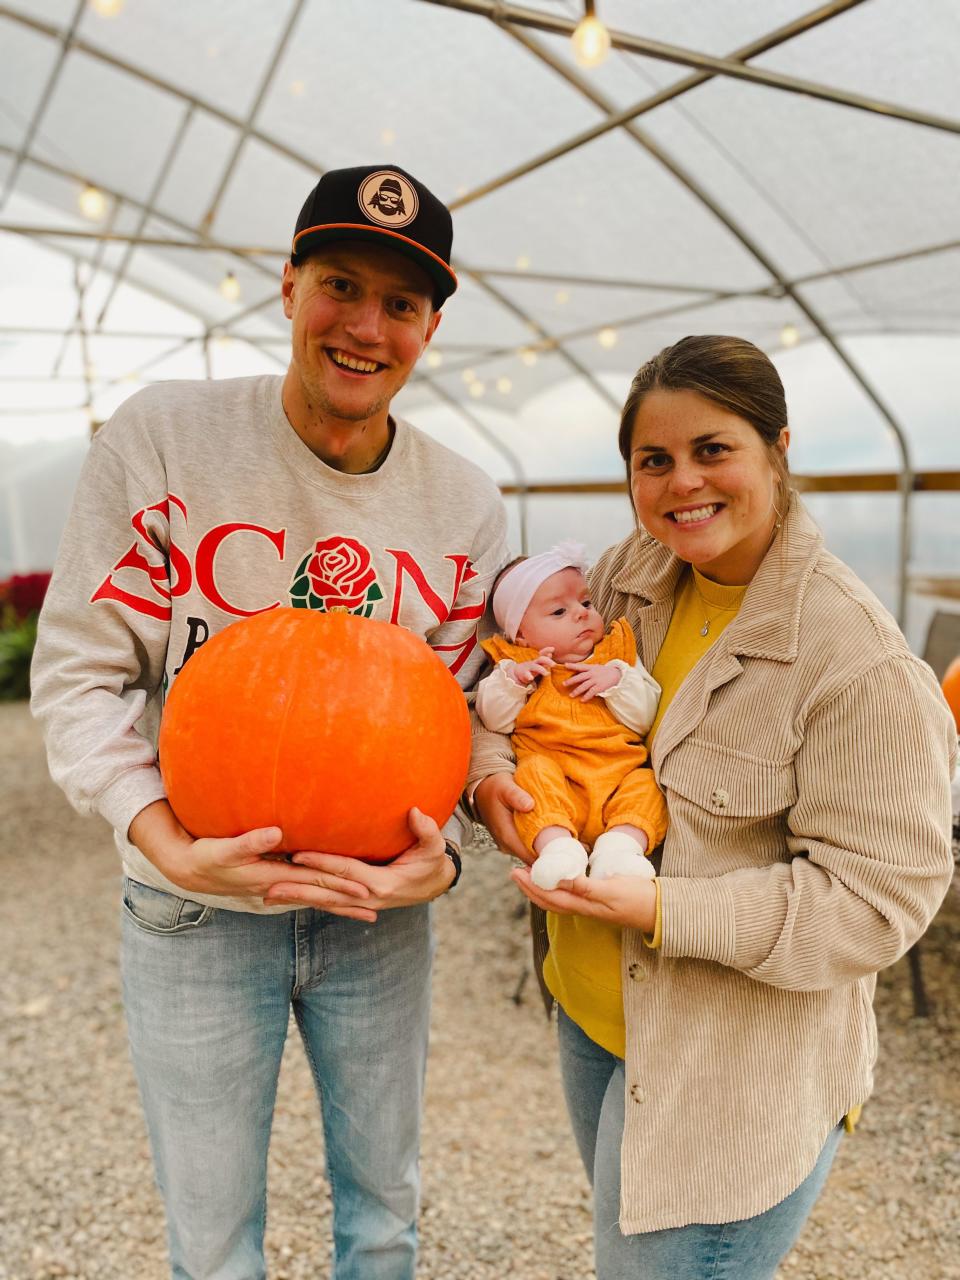 Dalton Hessel, 28, with his wife Claire and daughter Mia.
(Credit: Dalton Hessel)